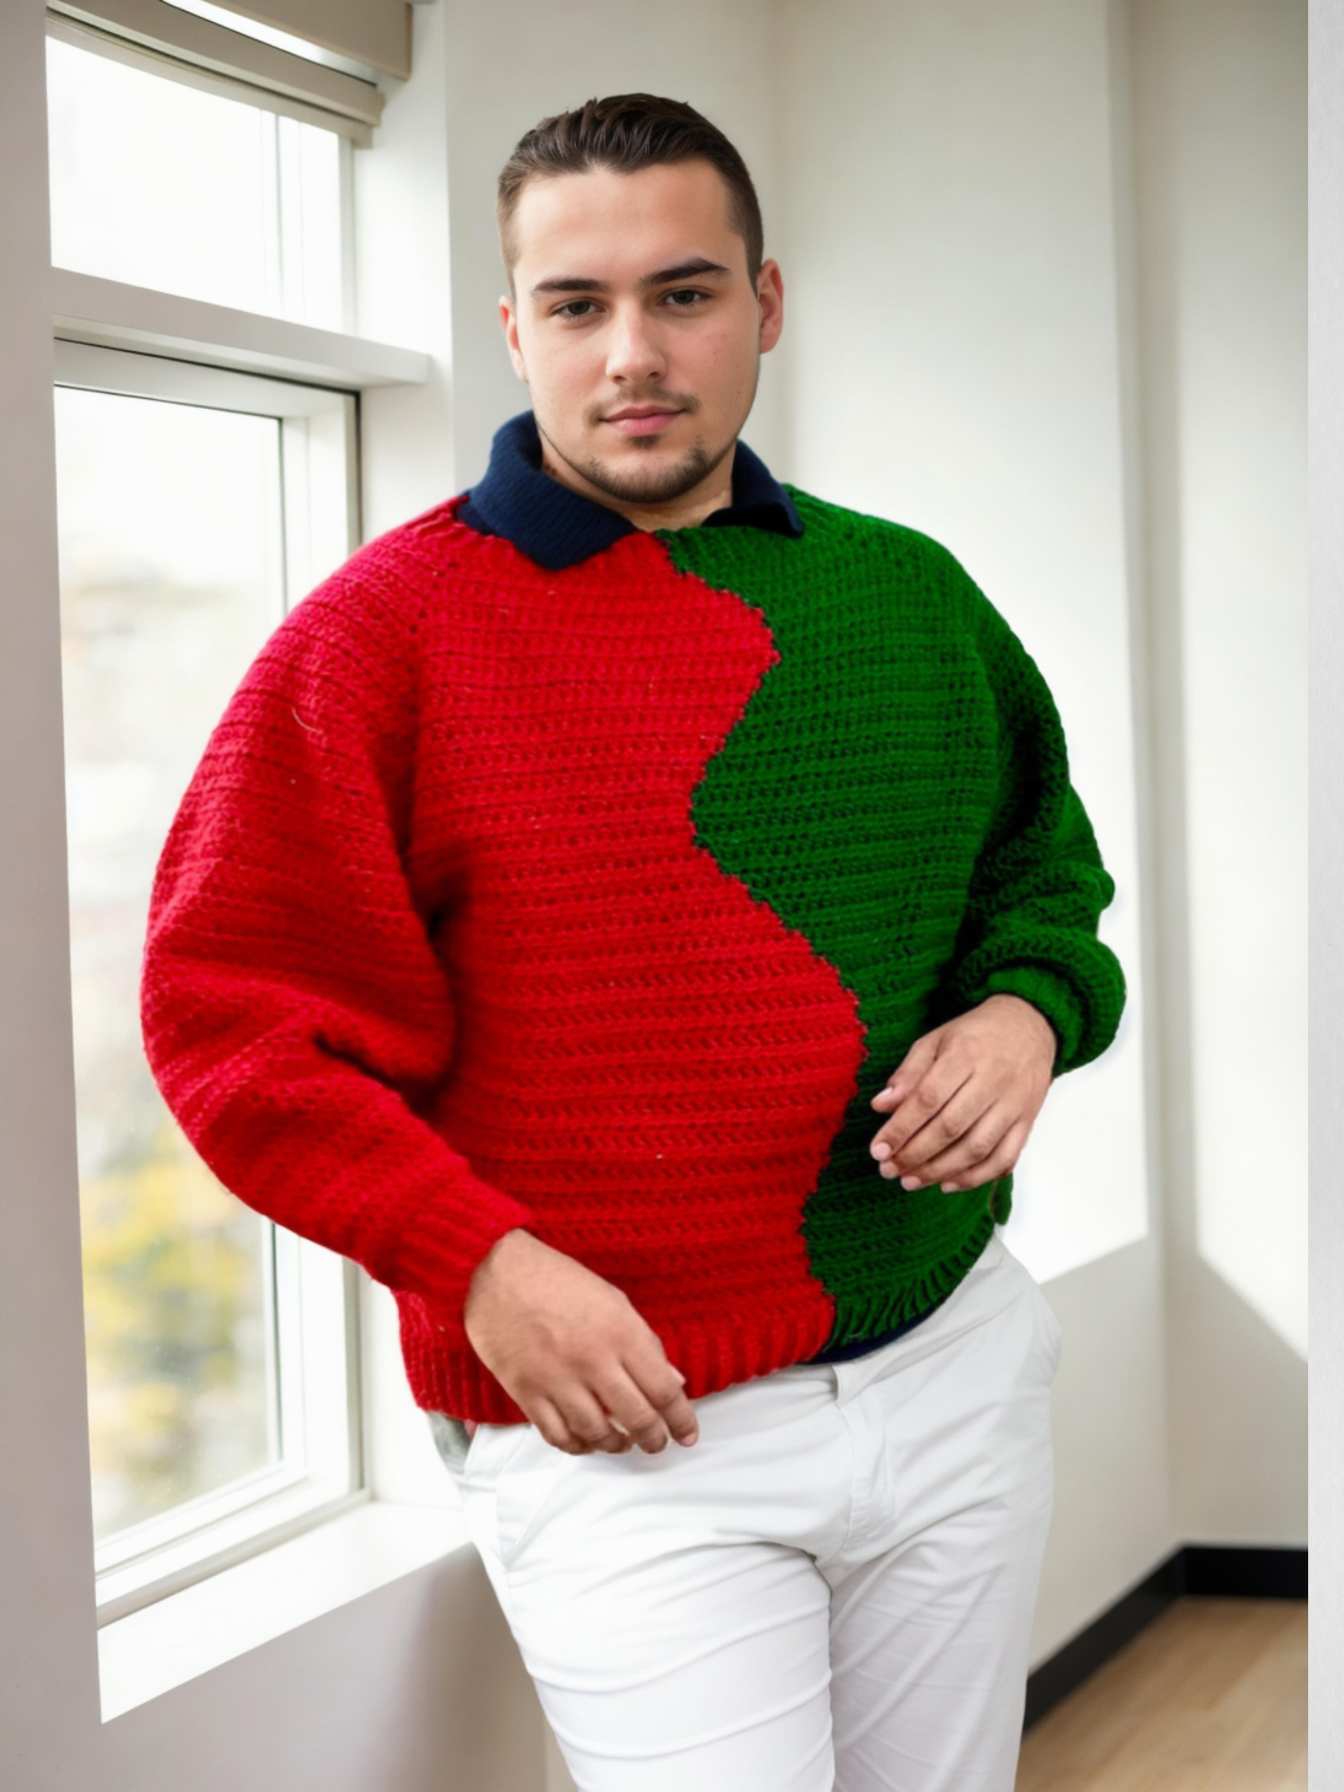 Handmade crochet Festive Red/Green Sweater by Mon Crochet